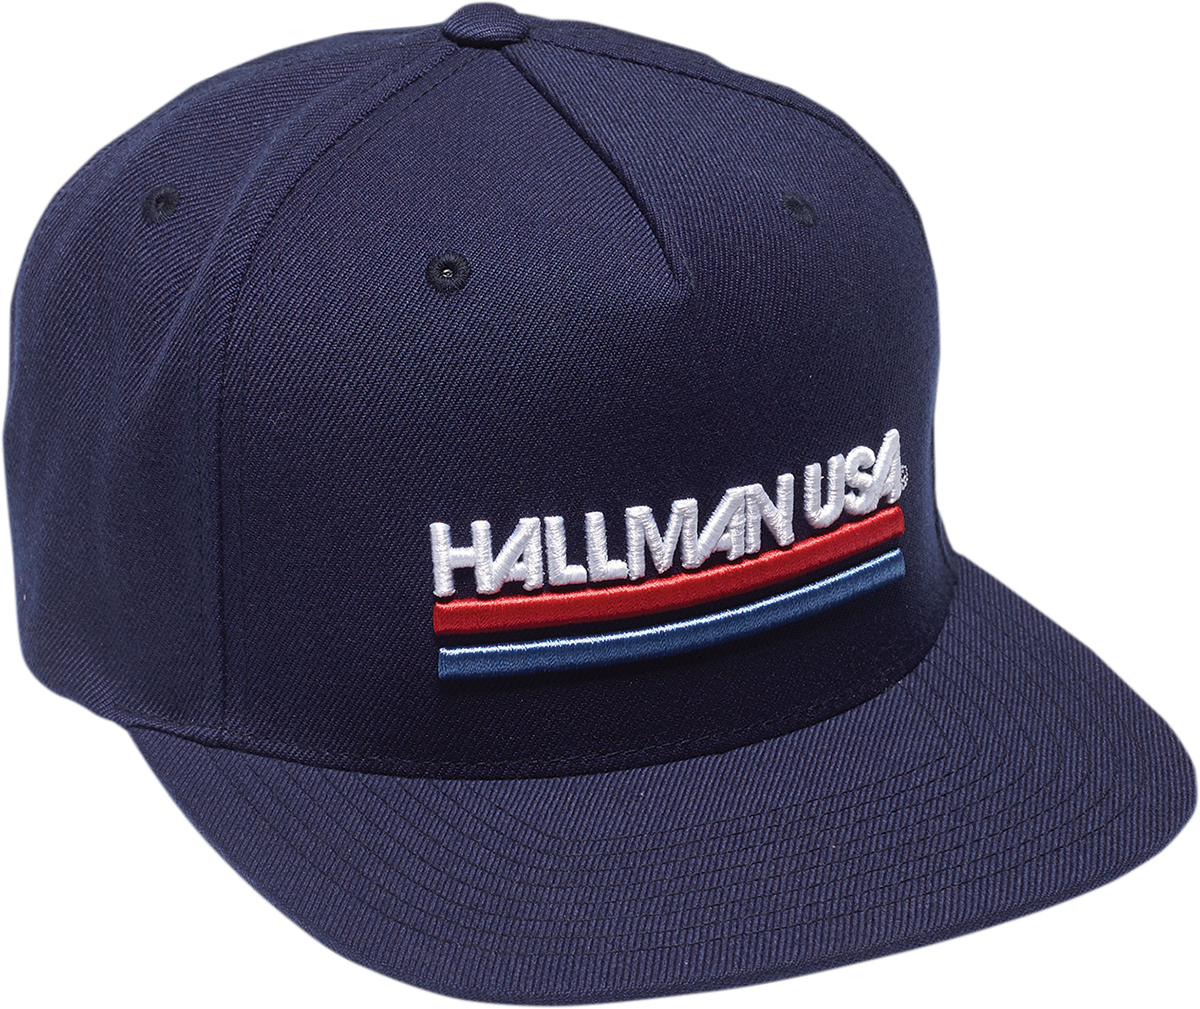 Hallman USA Hat - Navy